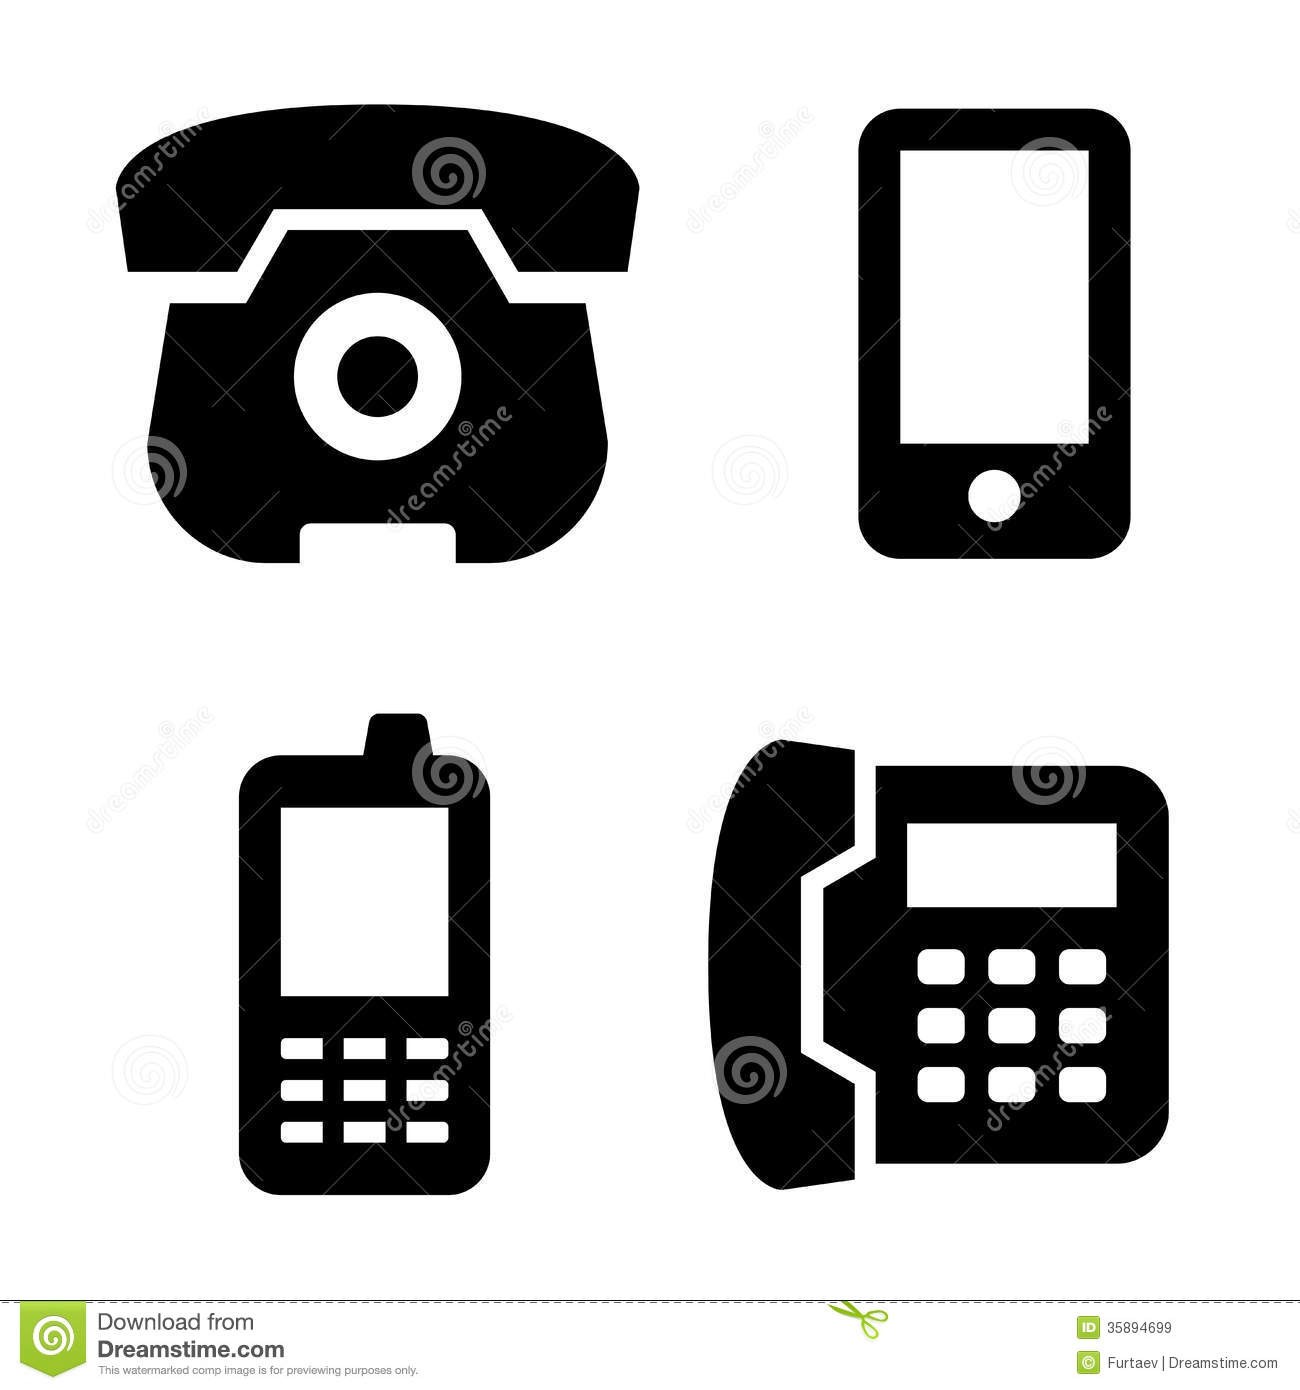 Phone Icons Set Stock Vector Illustration Of Black Center 35894699 Free